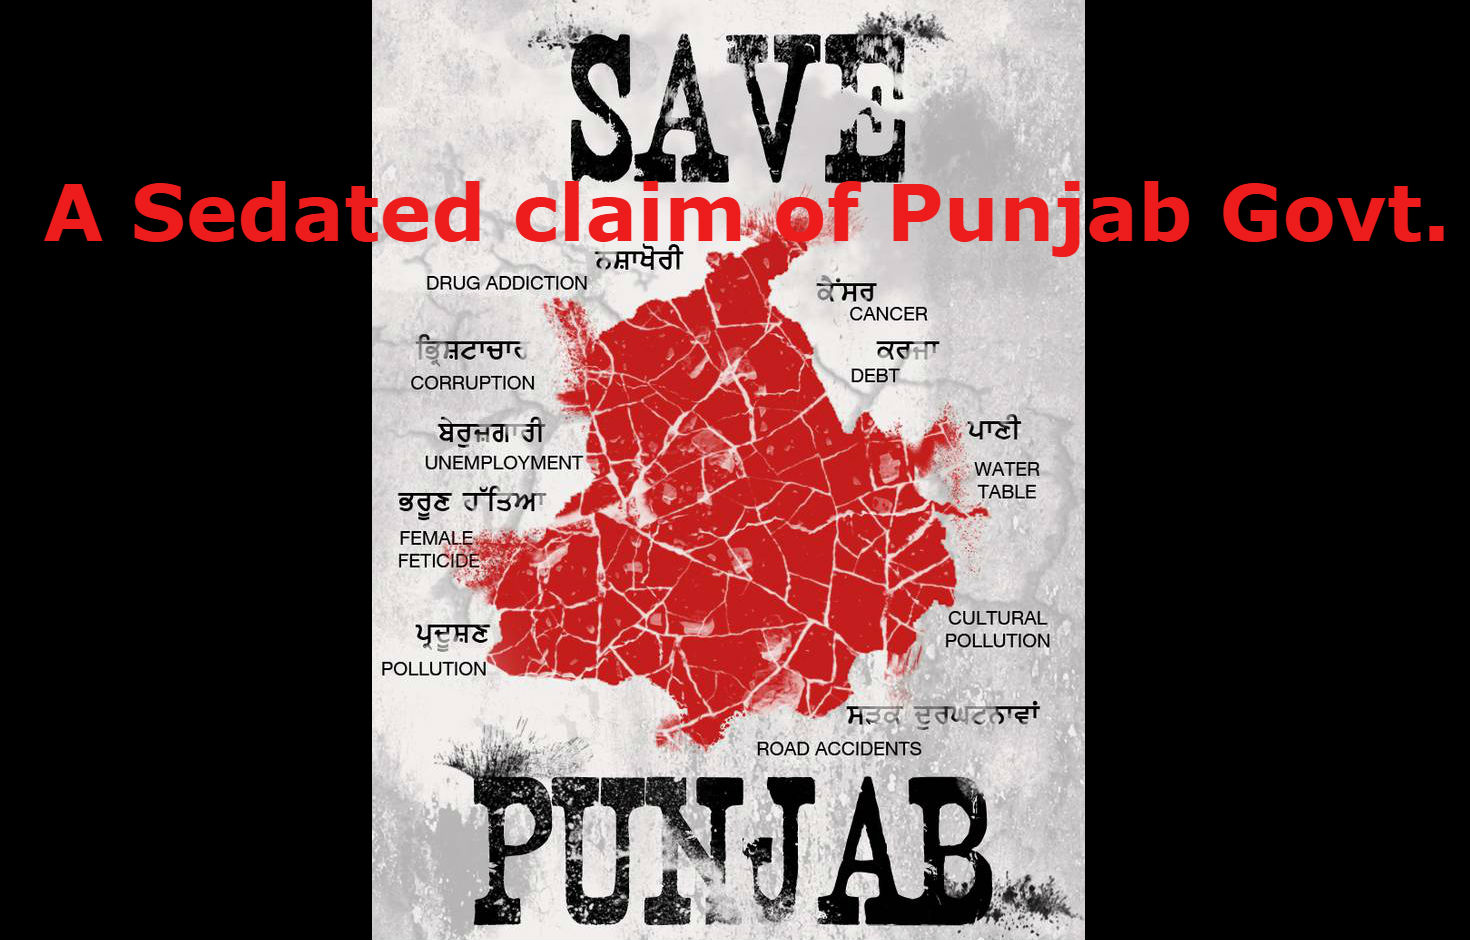 Punjab Govt Achievements and a Sedated Claim!!